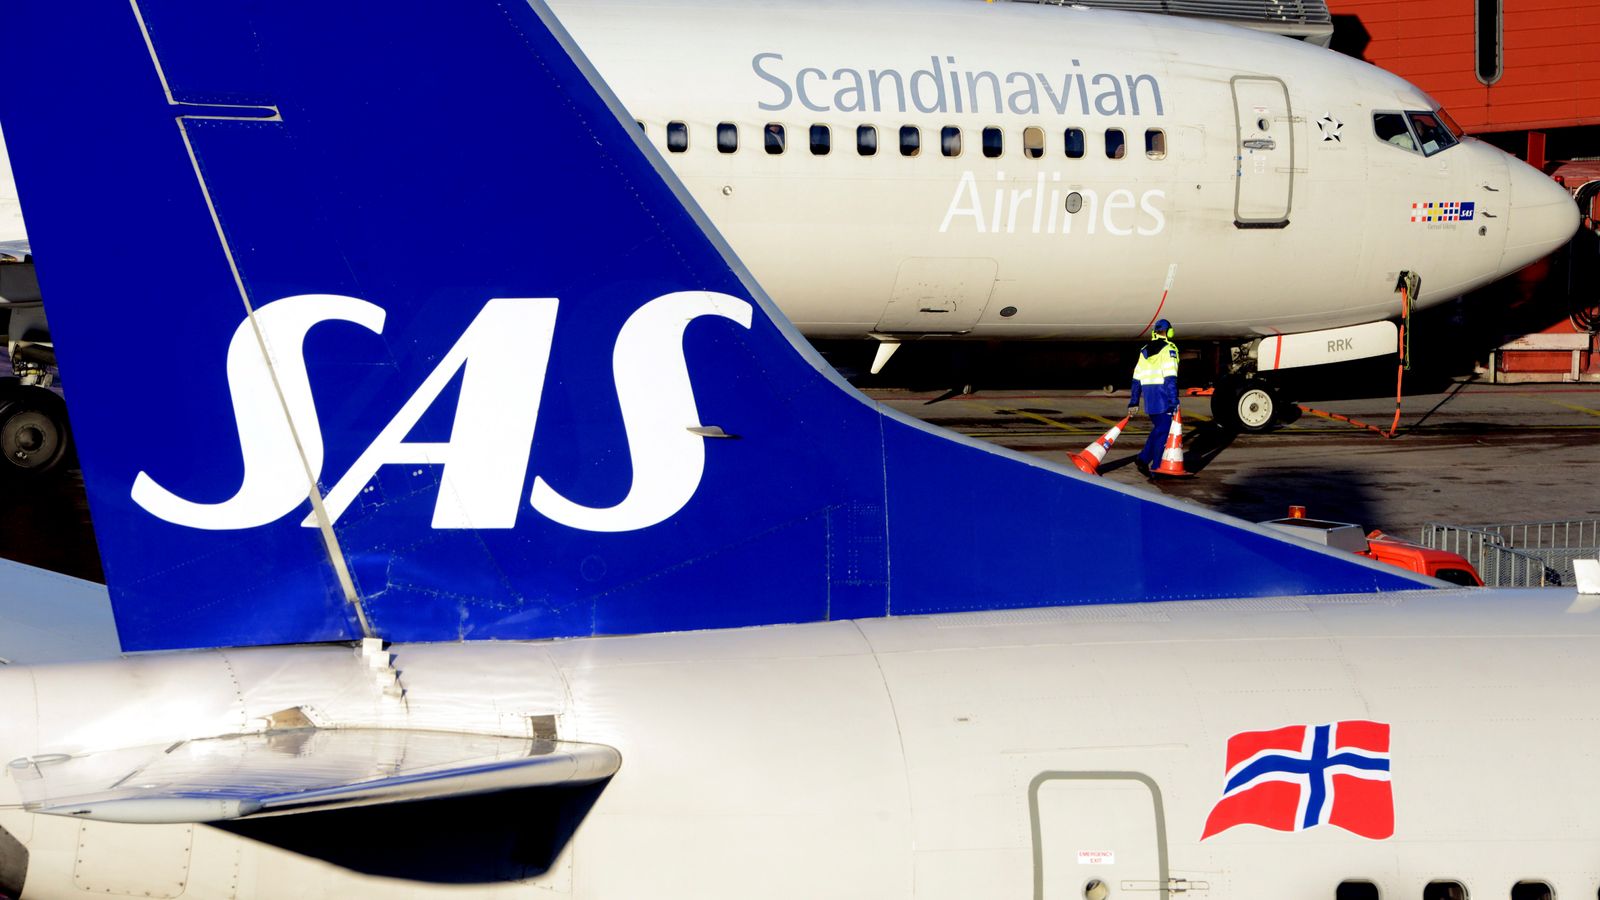 Russian stowaway 'feasted on plane food' after boarding Copenhagen to LA flight without ticket or passport, FBI says